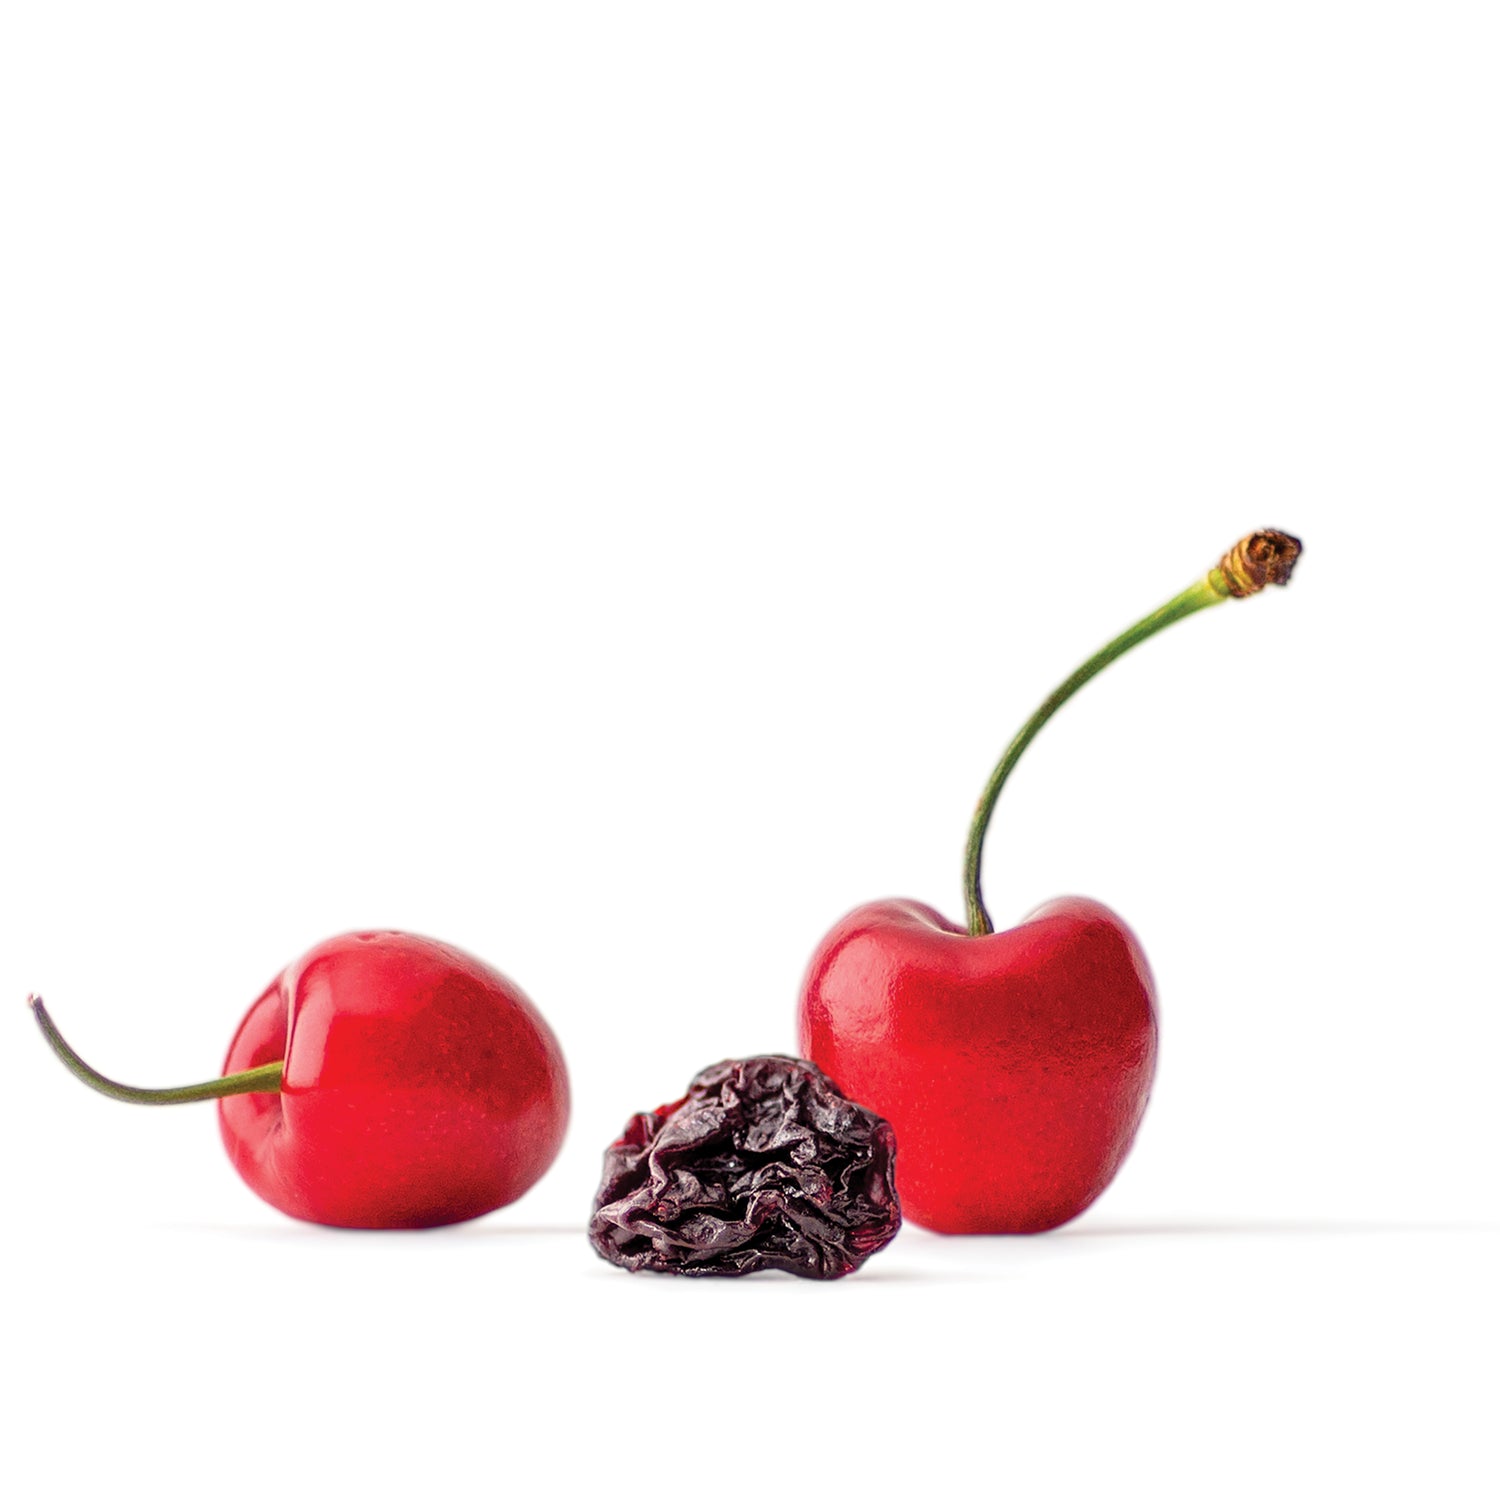 Tart Cherries - Organic - 10oz - Foods Alive